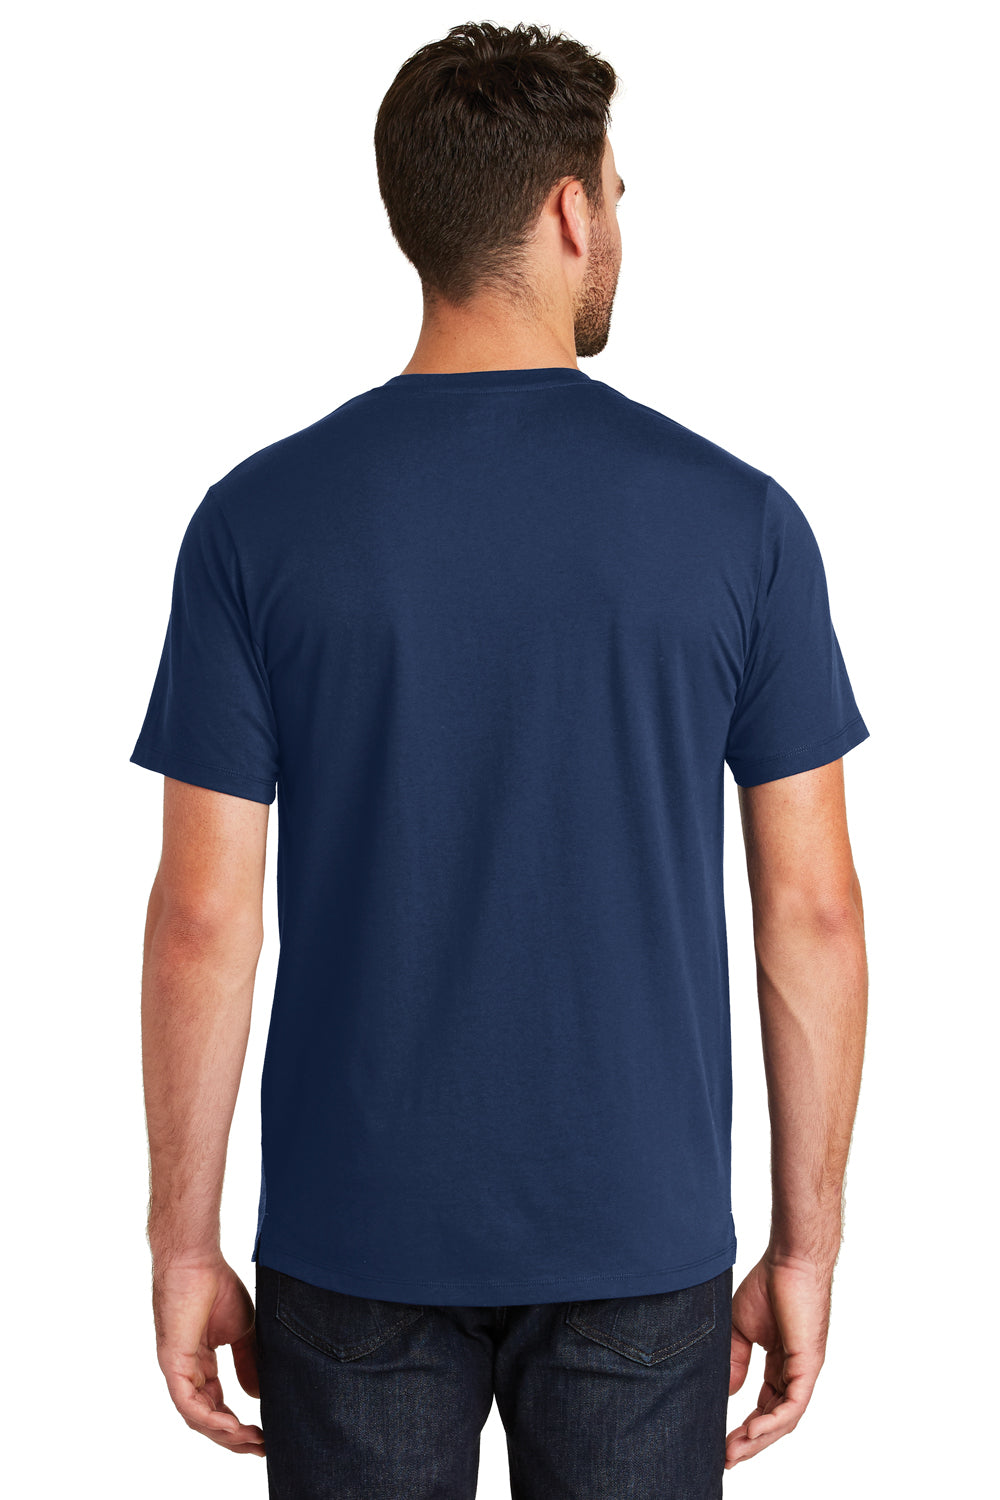 New Era NEA107 Mens Heritage Short Sleeve Crewneck T-Shirt Dark Royal Blue/Royal Blue Twist Back